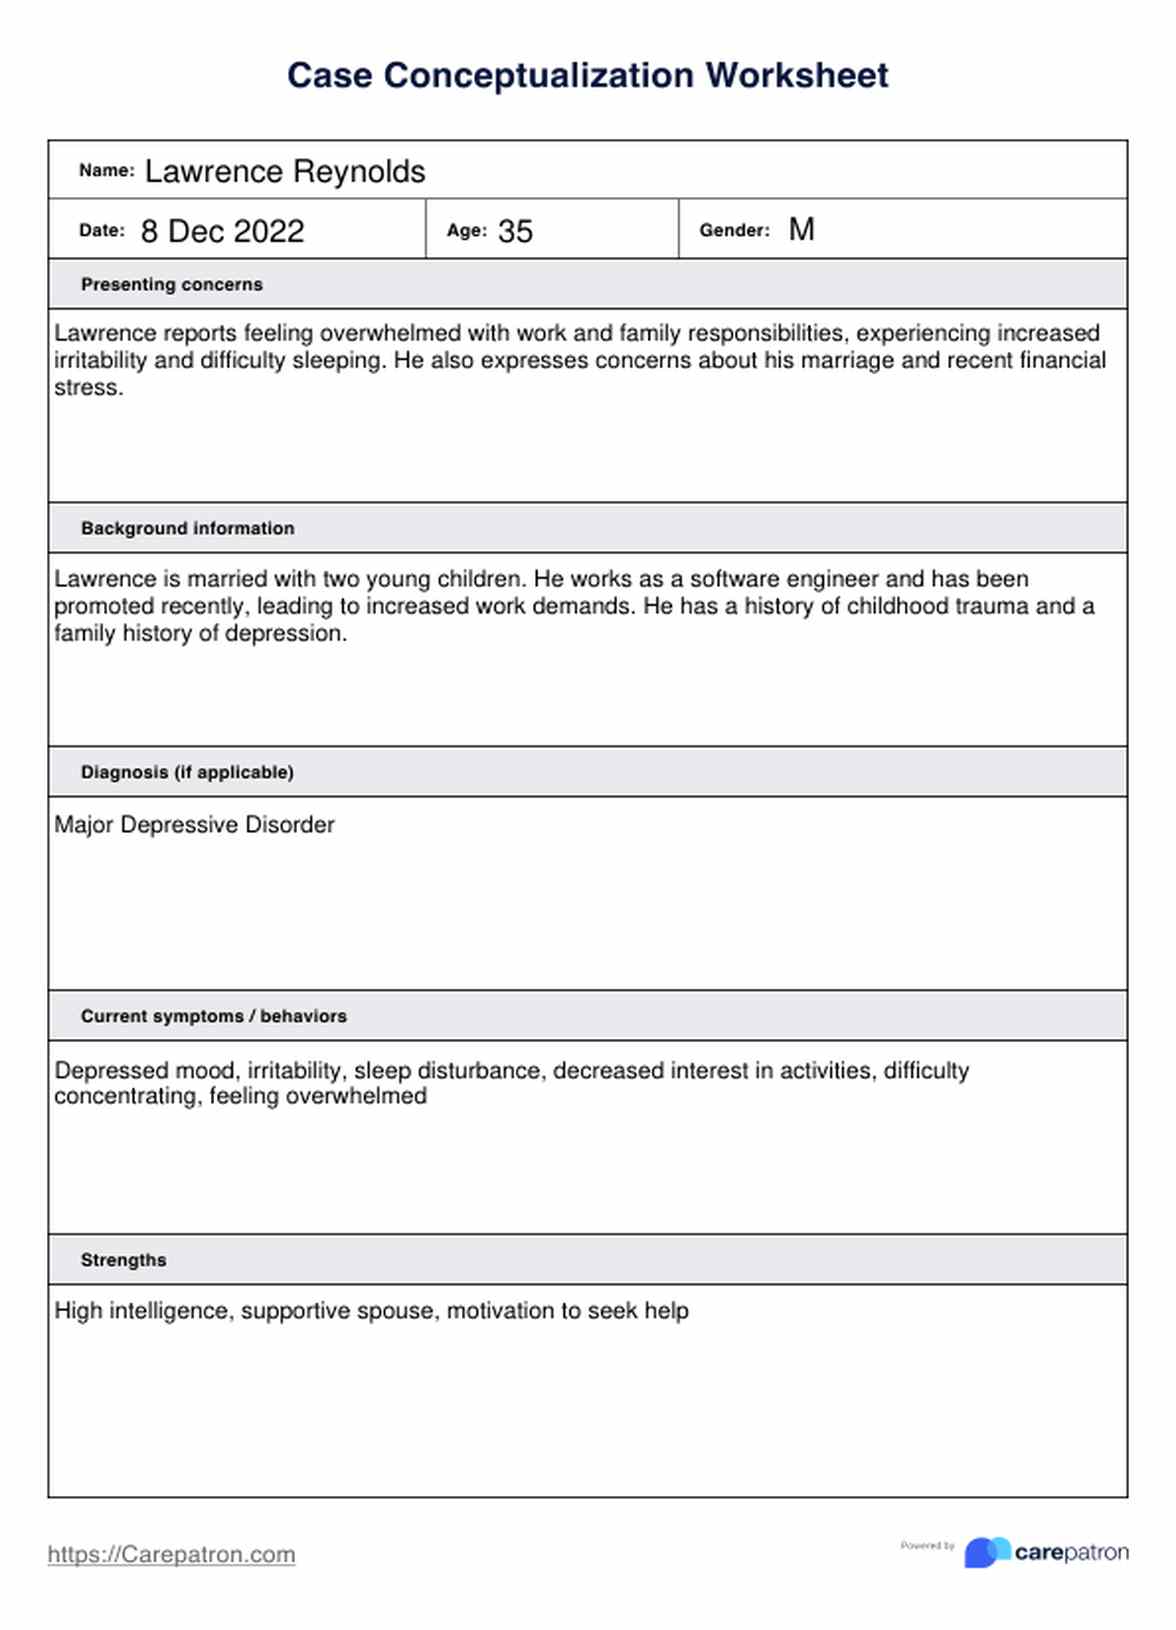 Case Conceptualization Worksheet PDF Example